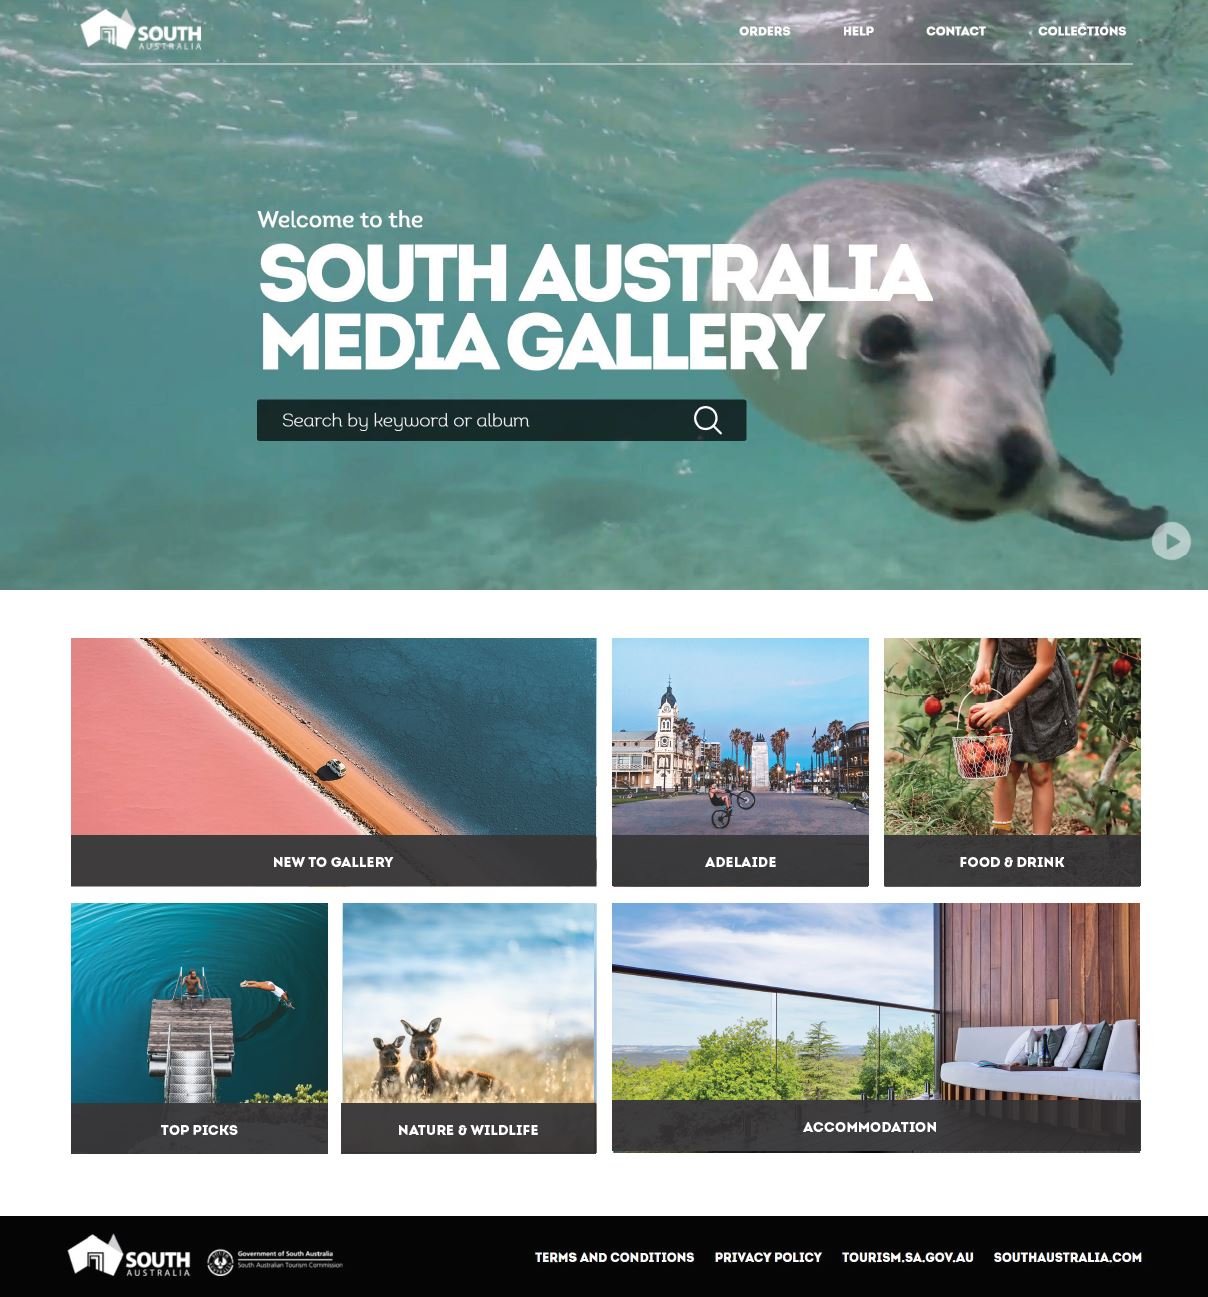 south australian tourism board